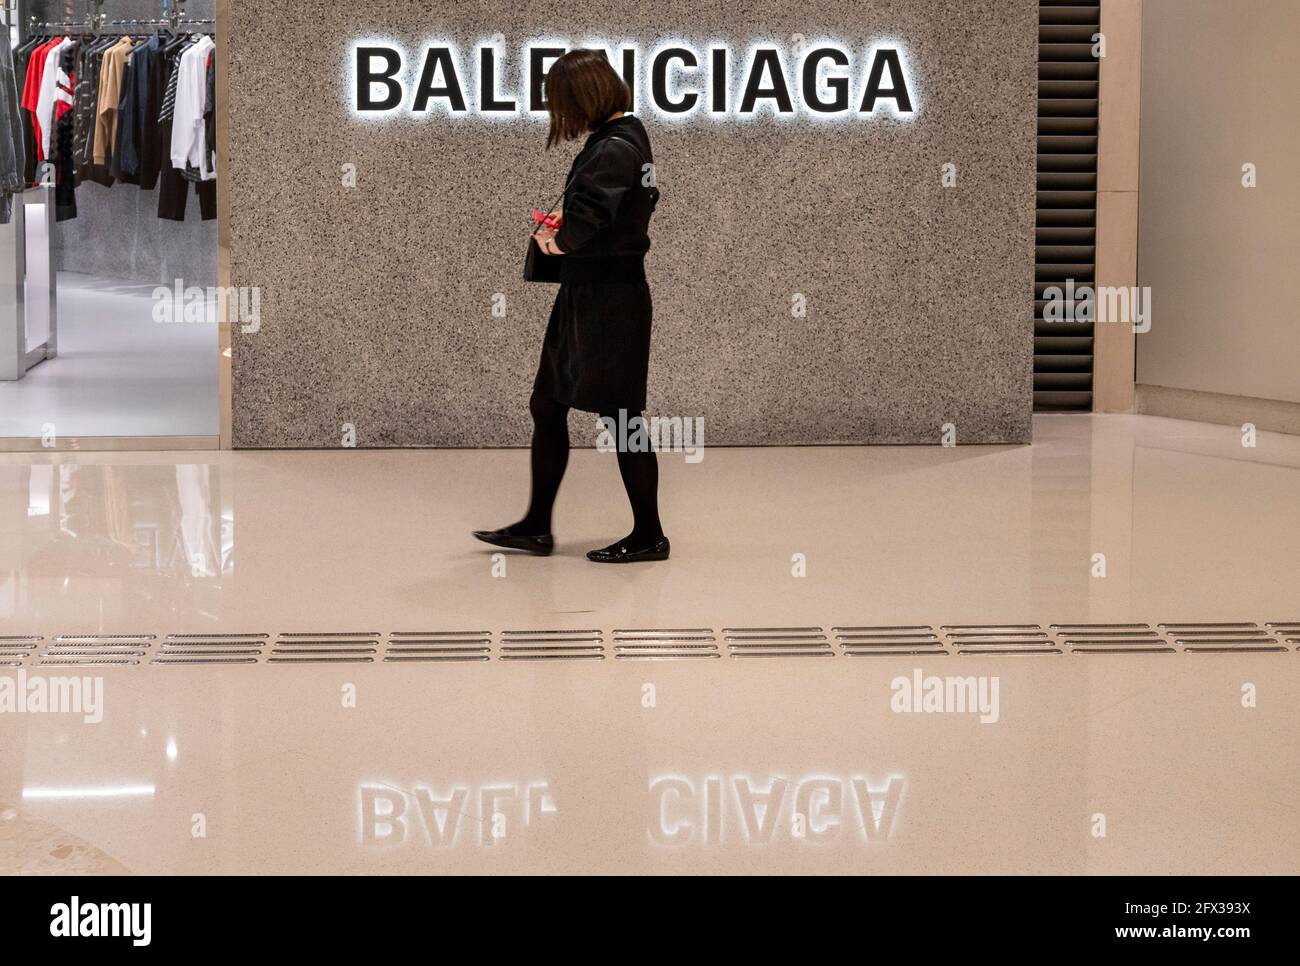 111 Balenciaga Store Stock Photos - Free & Royalty-Free Stock